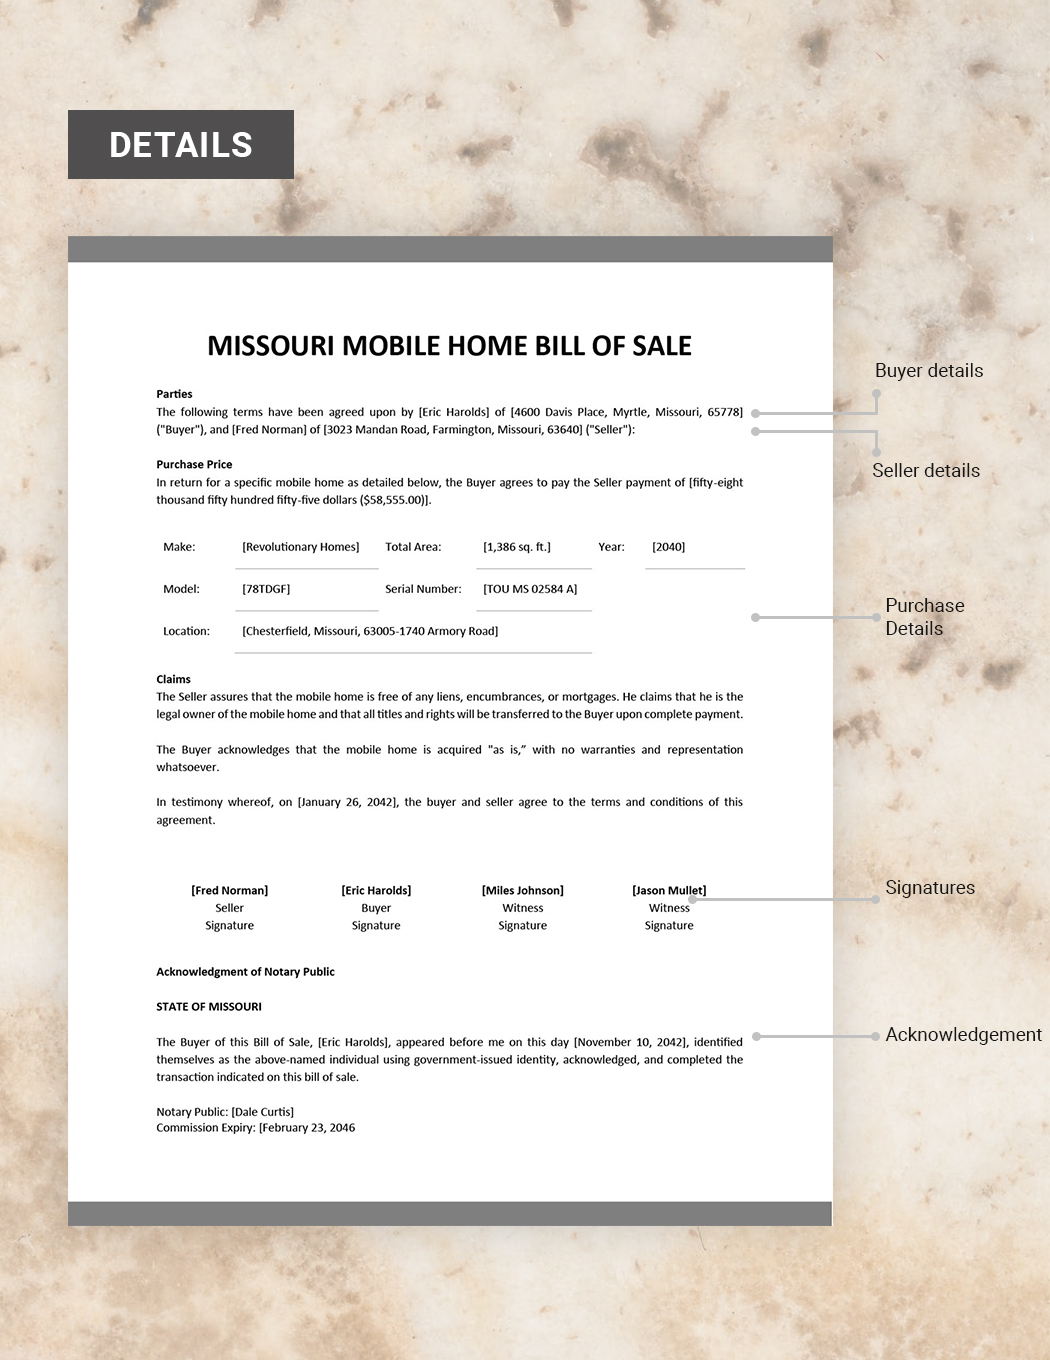 Missouri Mobile Home Bill of Sale Template